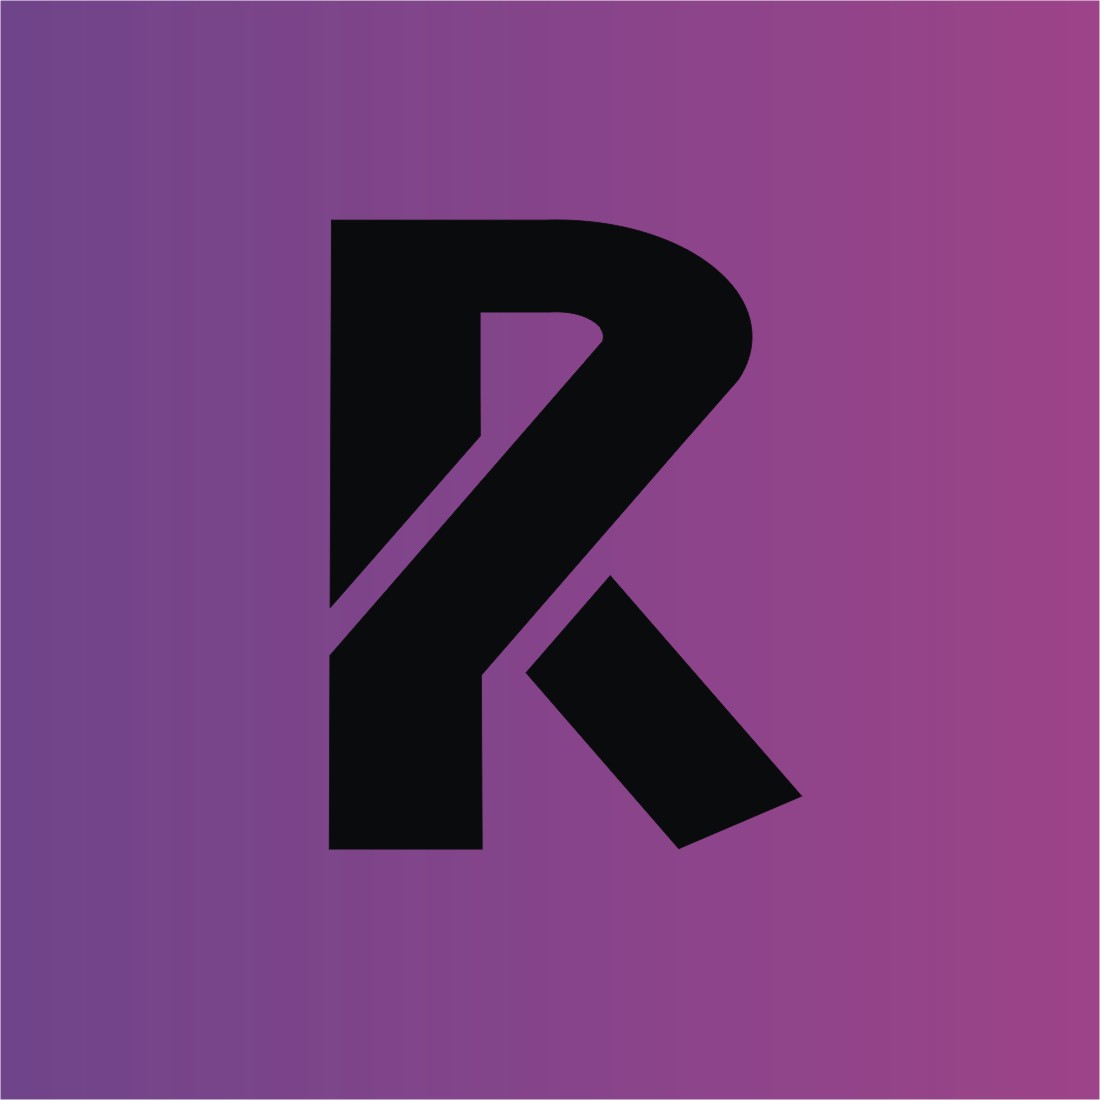 Letter R K logo preview image.